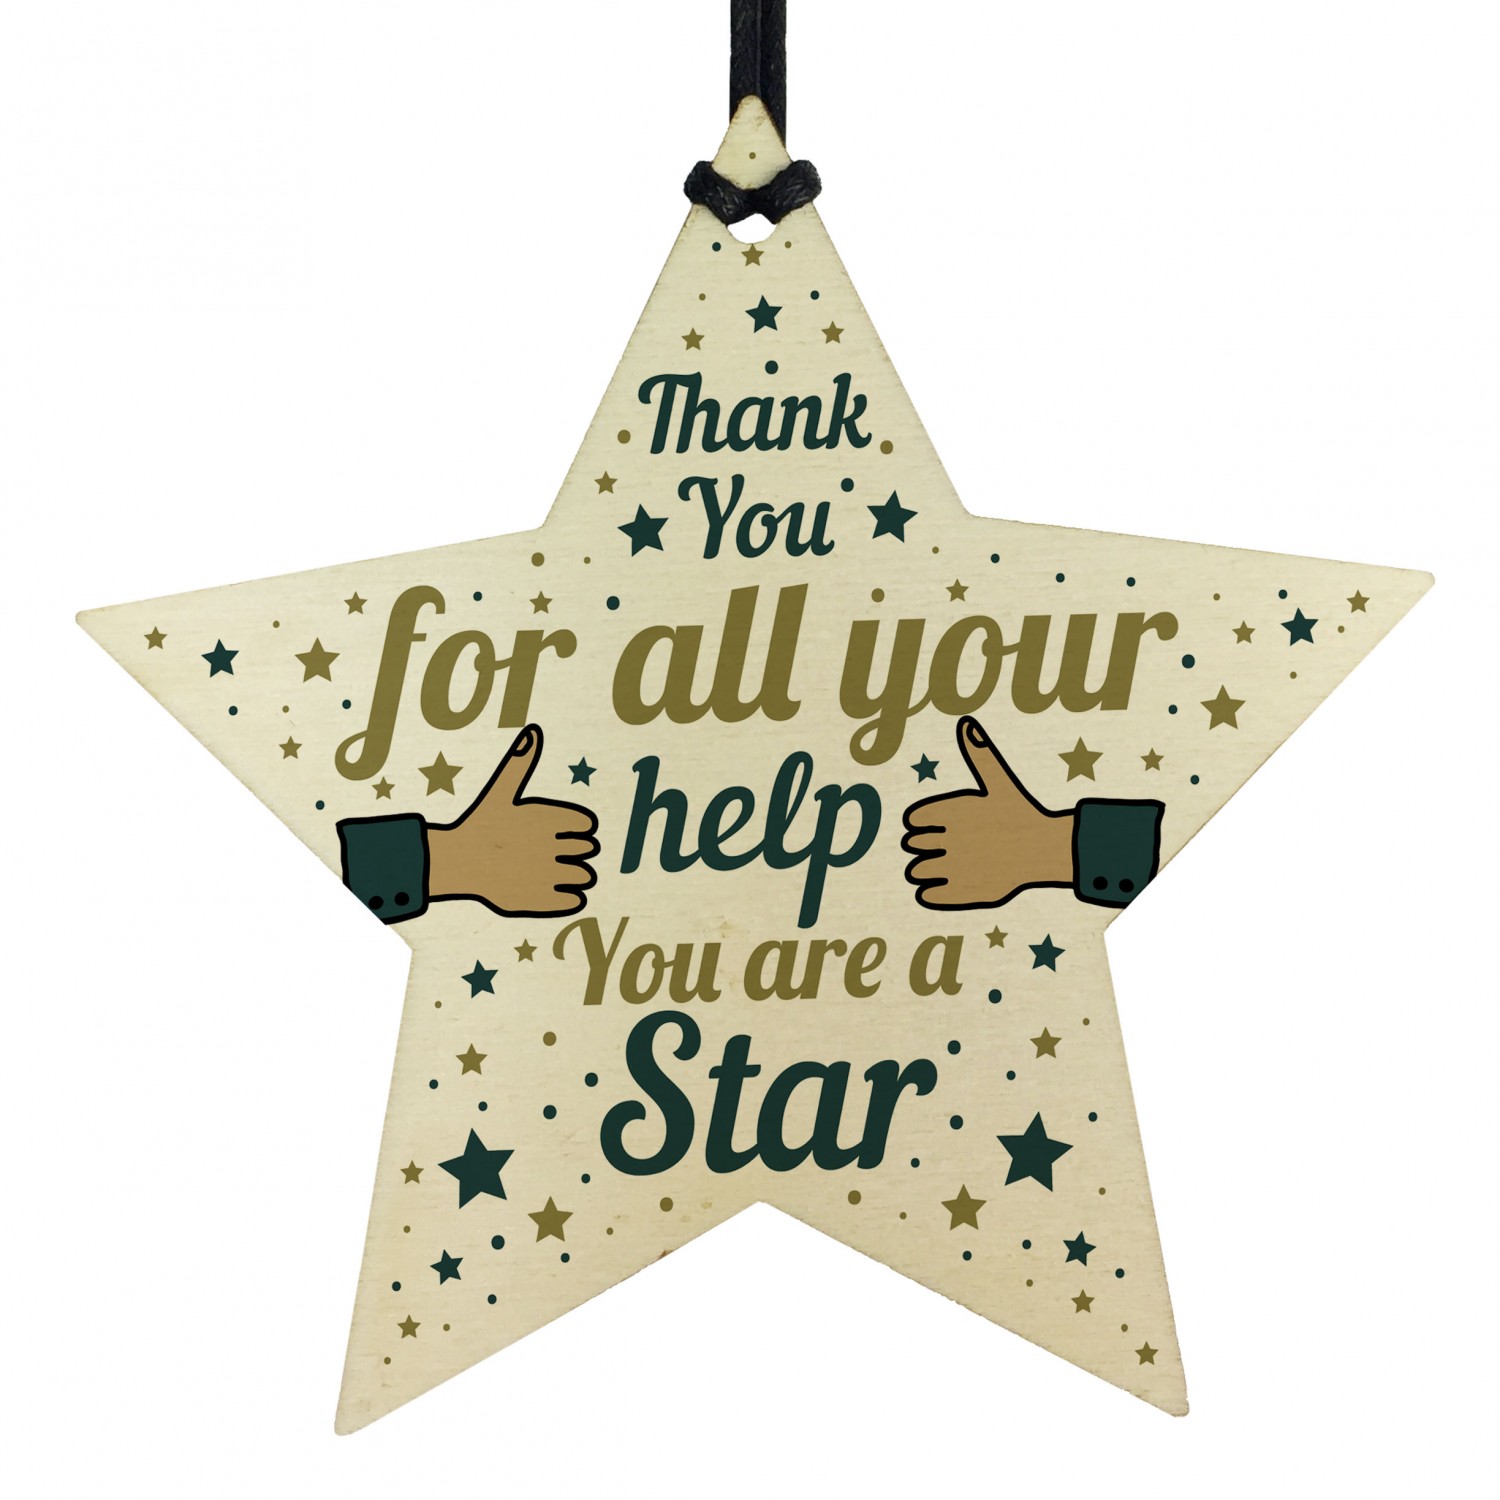 Thank stars. Star thanks. Send Gifts to teachers.